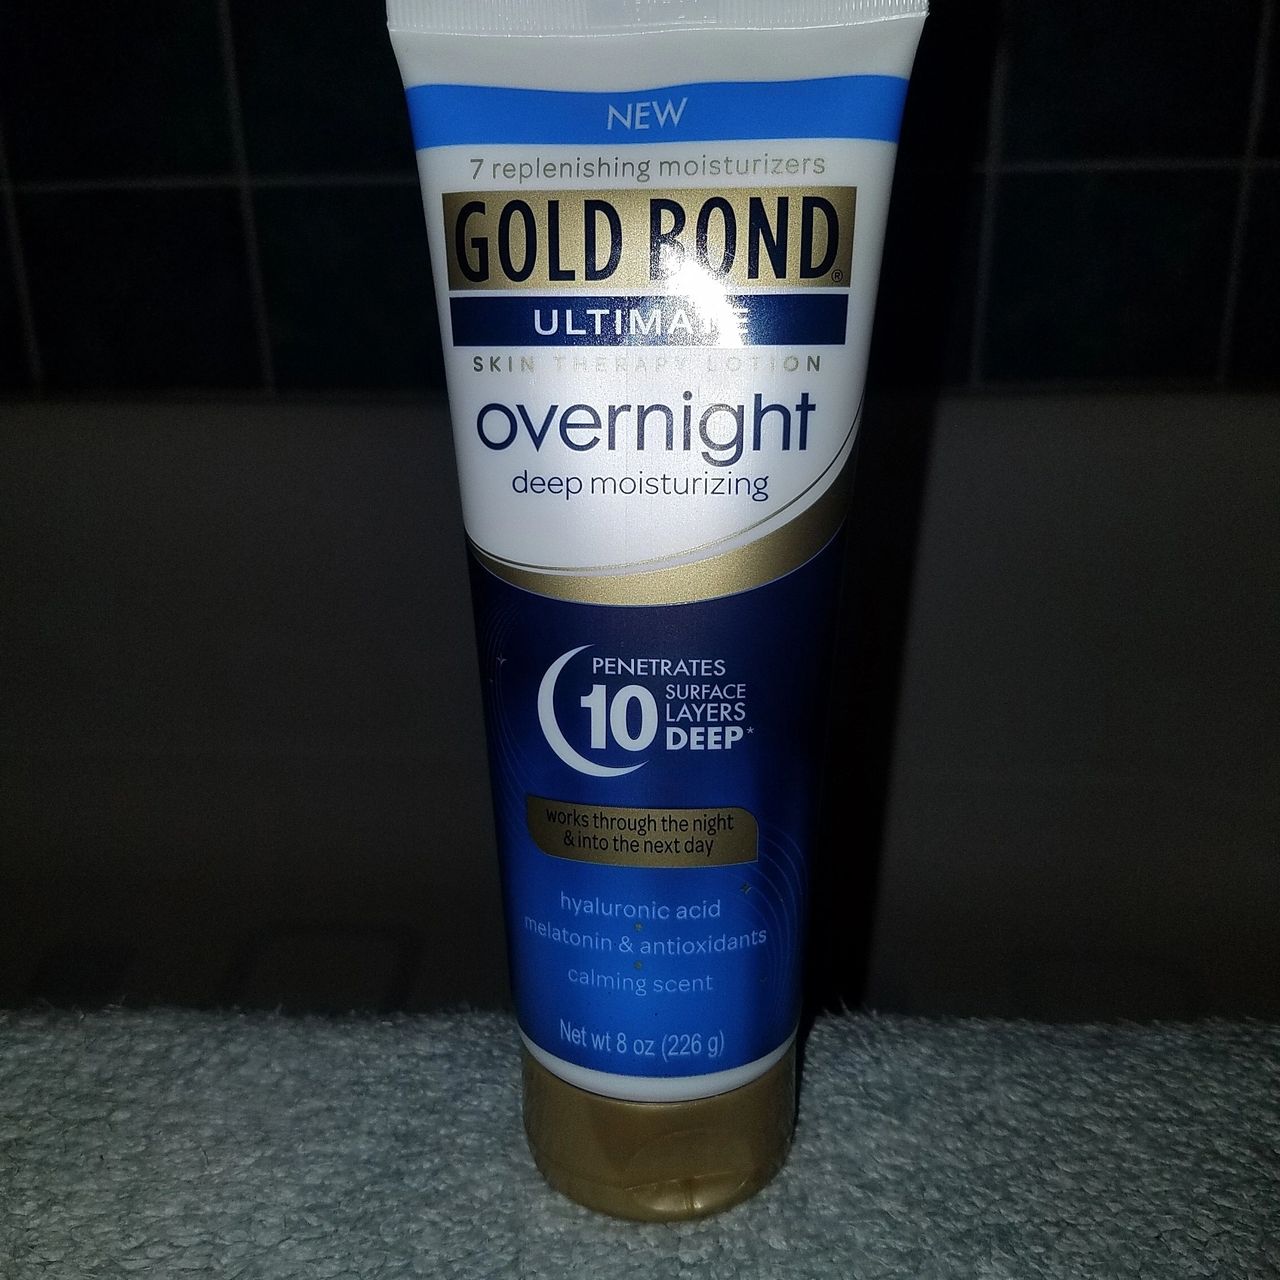 Gold Bond Ultimate Overnight Deep Moisturizing Lotion